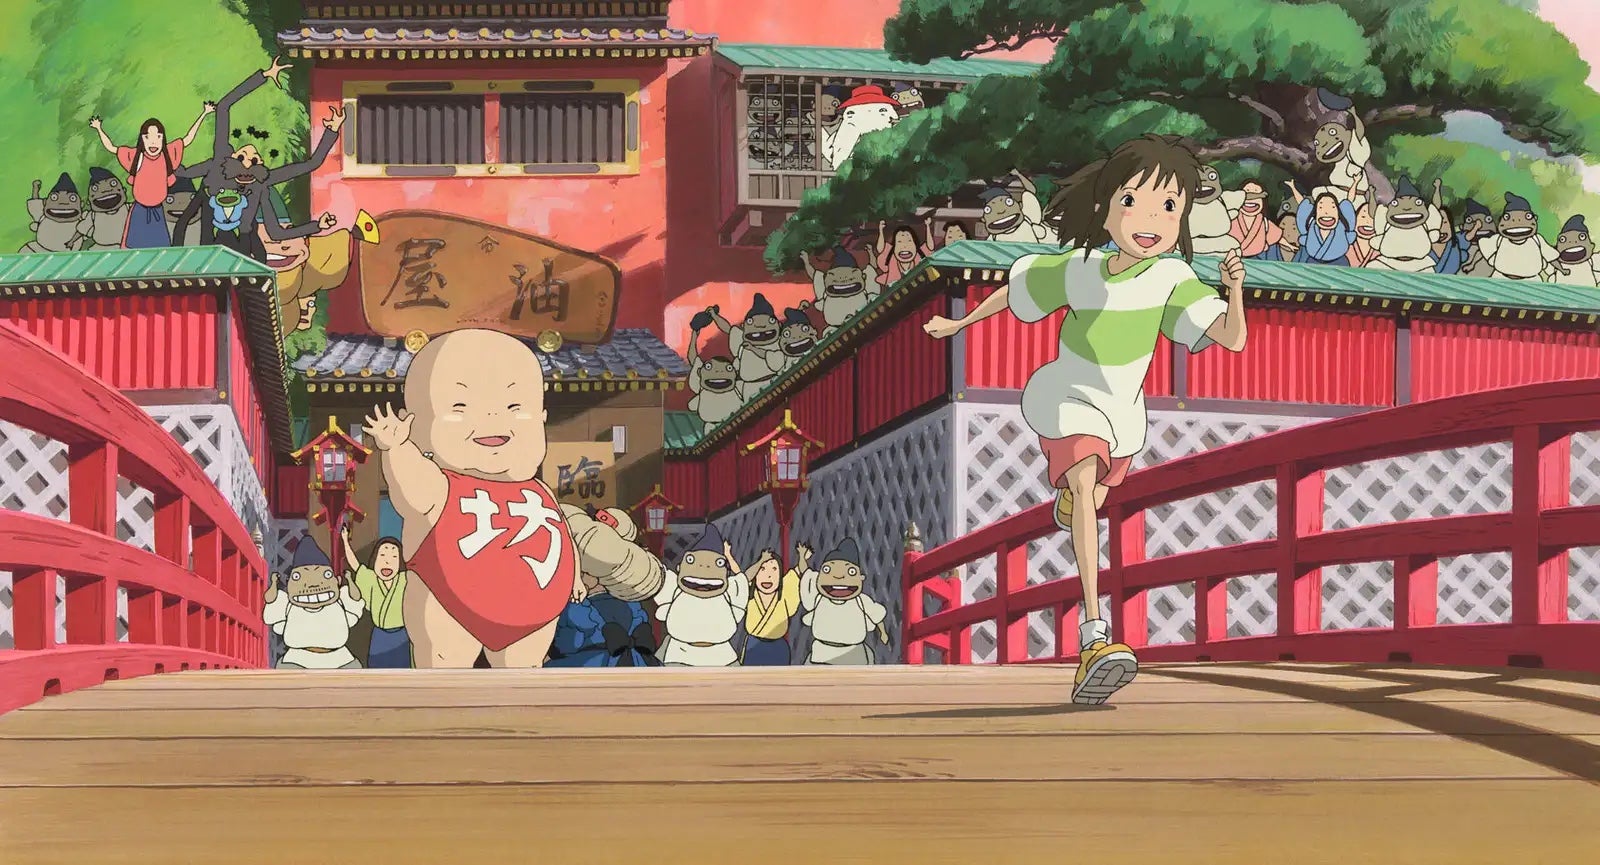 Journey to Miyazaki's Fantastic Worlds at Ghibli Park